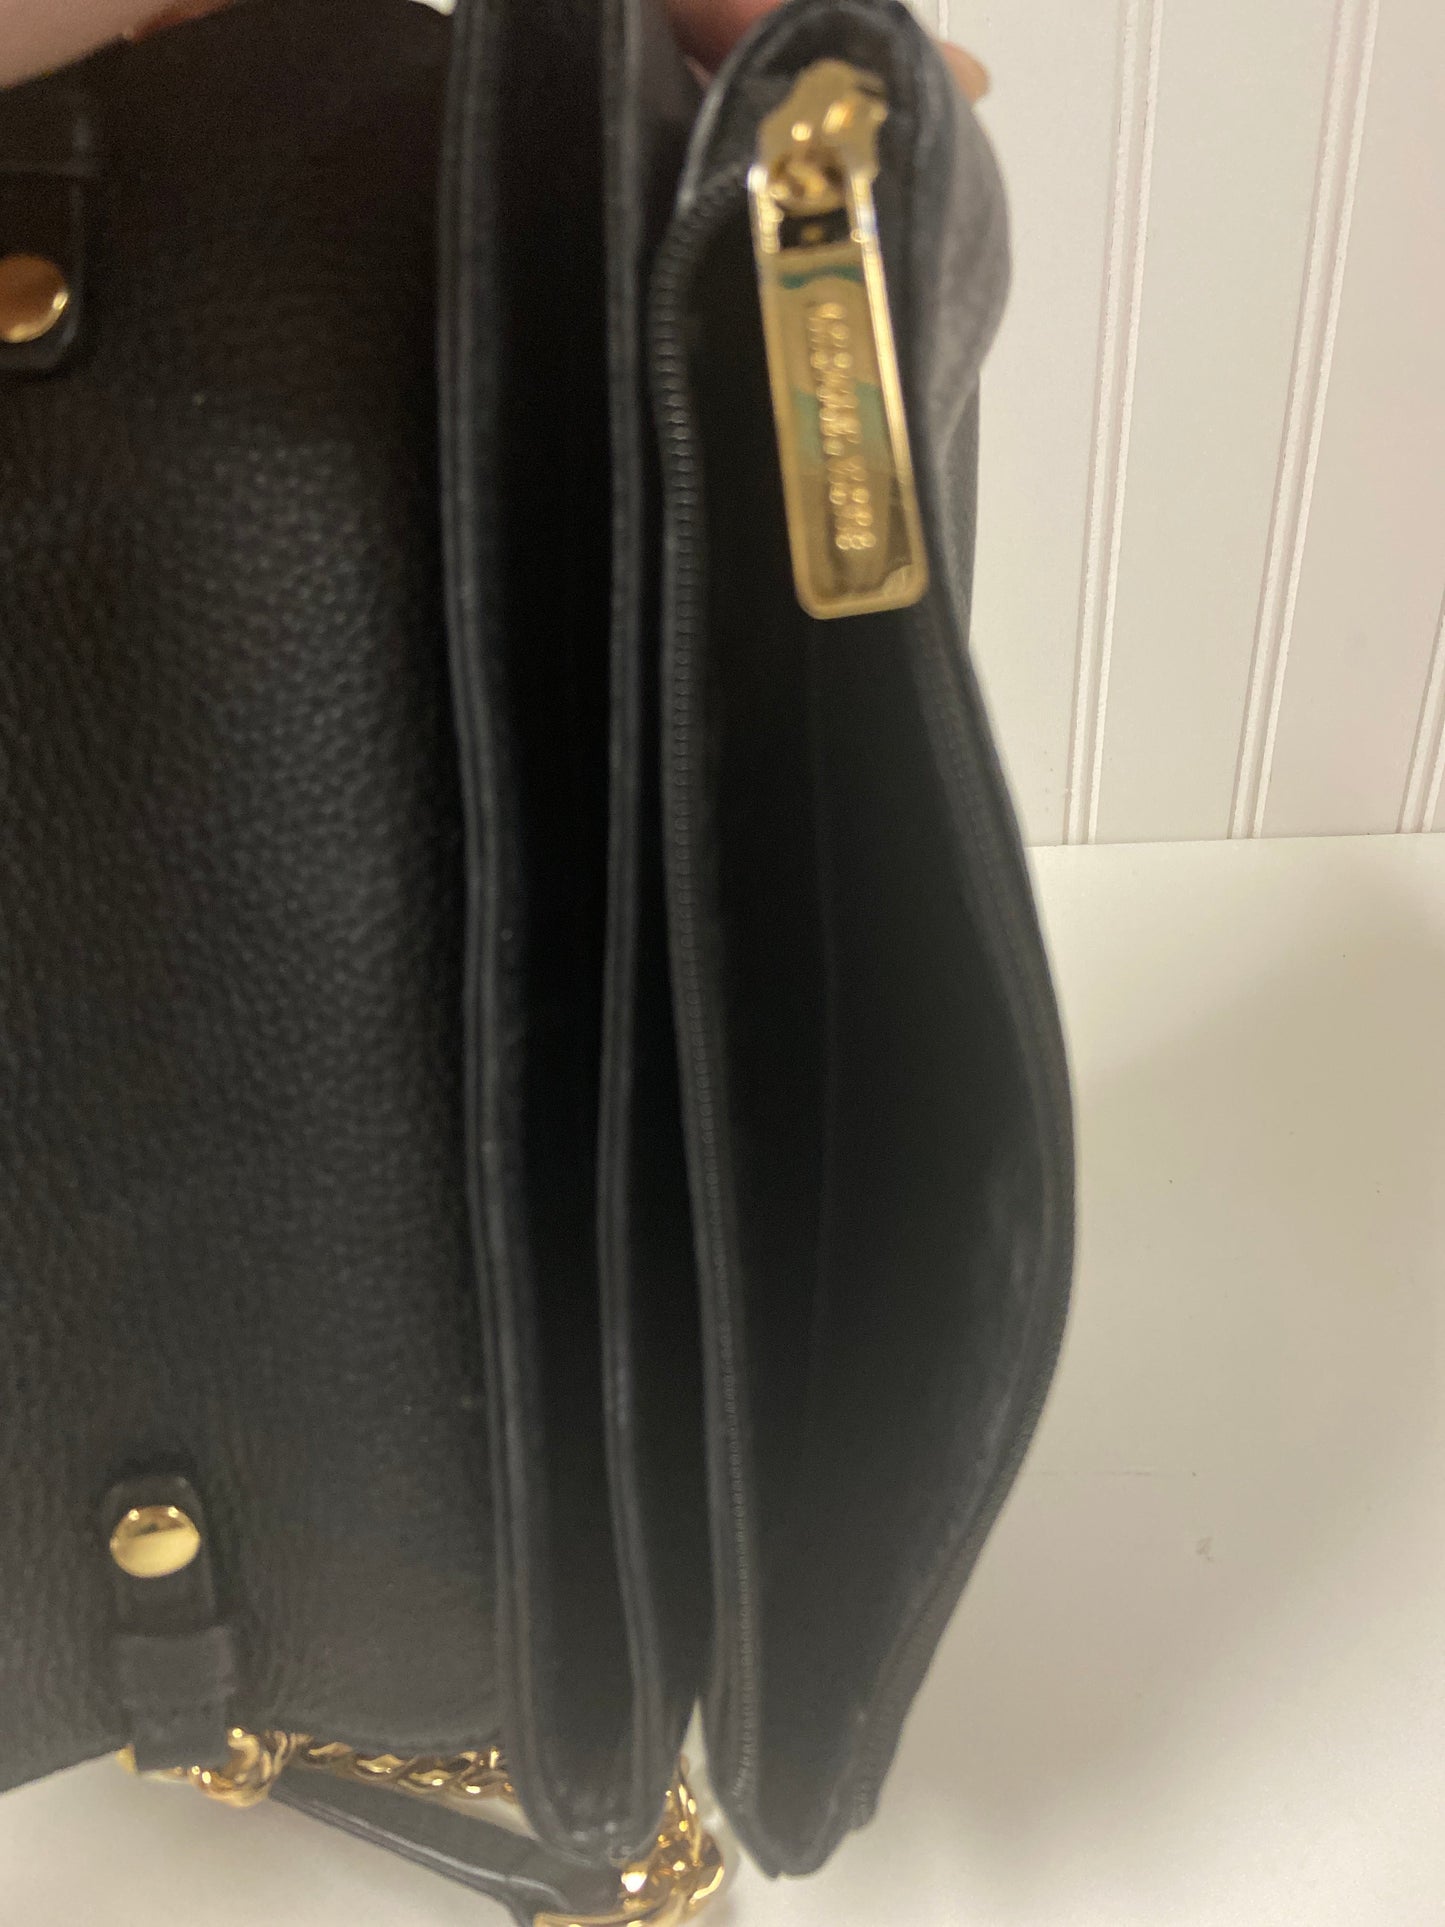 Handbag Designer Michael By Michael Kors, Size Small